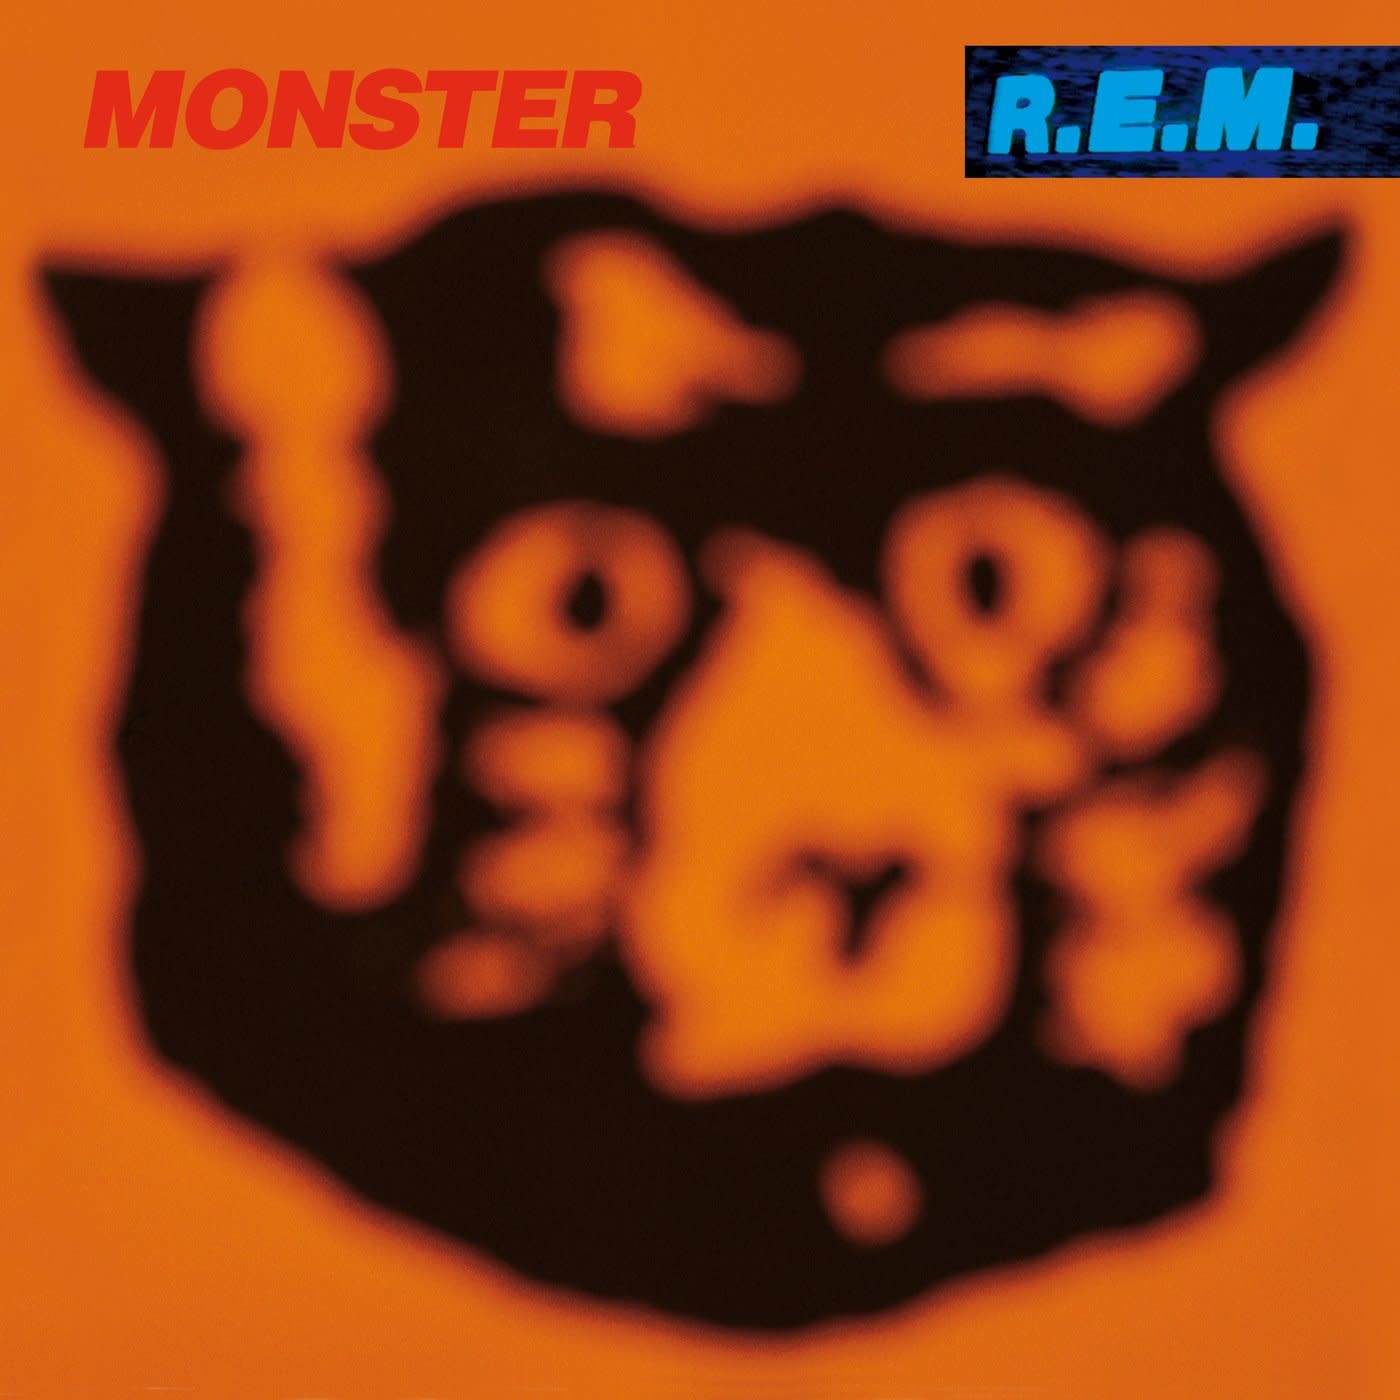 R.E.M. - Monster (25th Anniversary Edition)